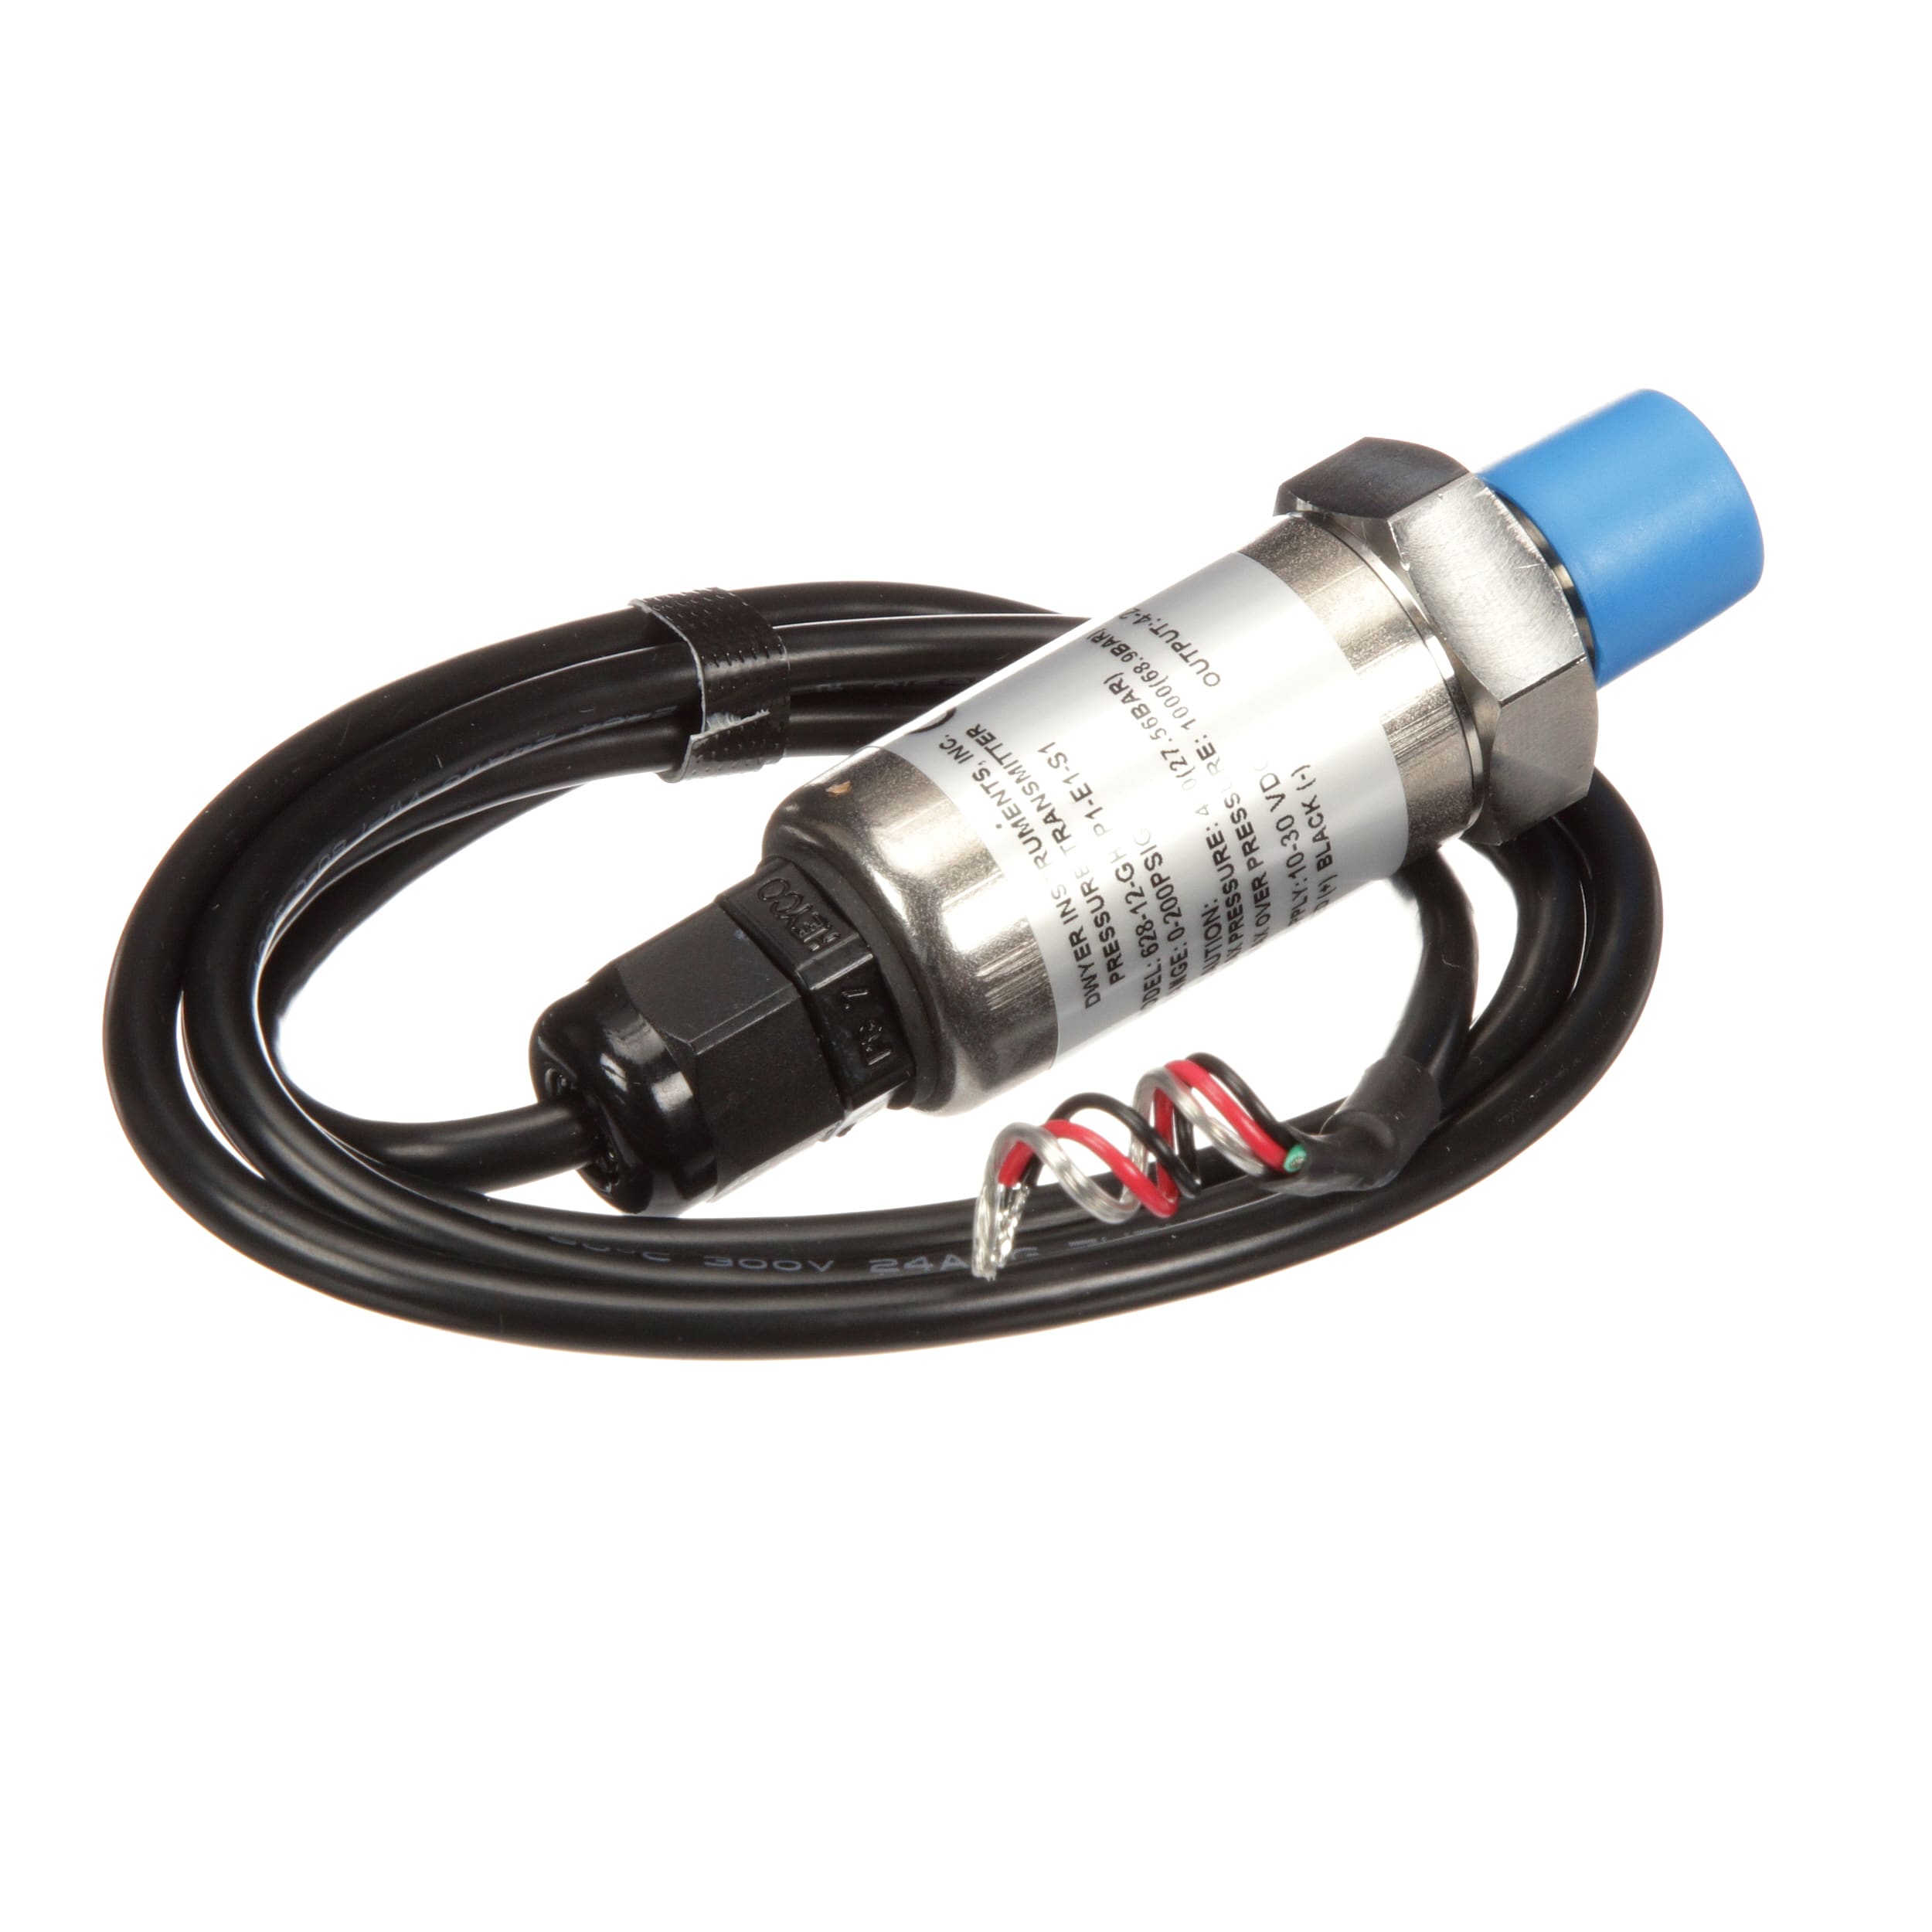 IP66 628-12-GH-P1-E1-S1 range 0-200 psig NEMA 4X w/3 ft cable gland Dwyer® Industrial pressure transmitter 